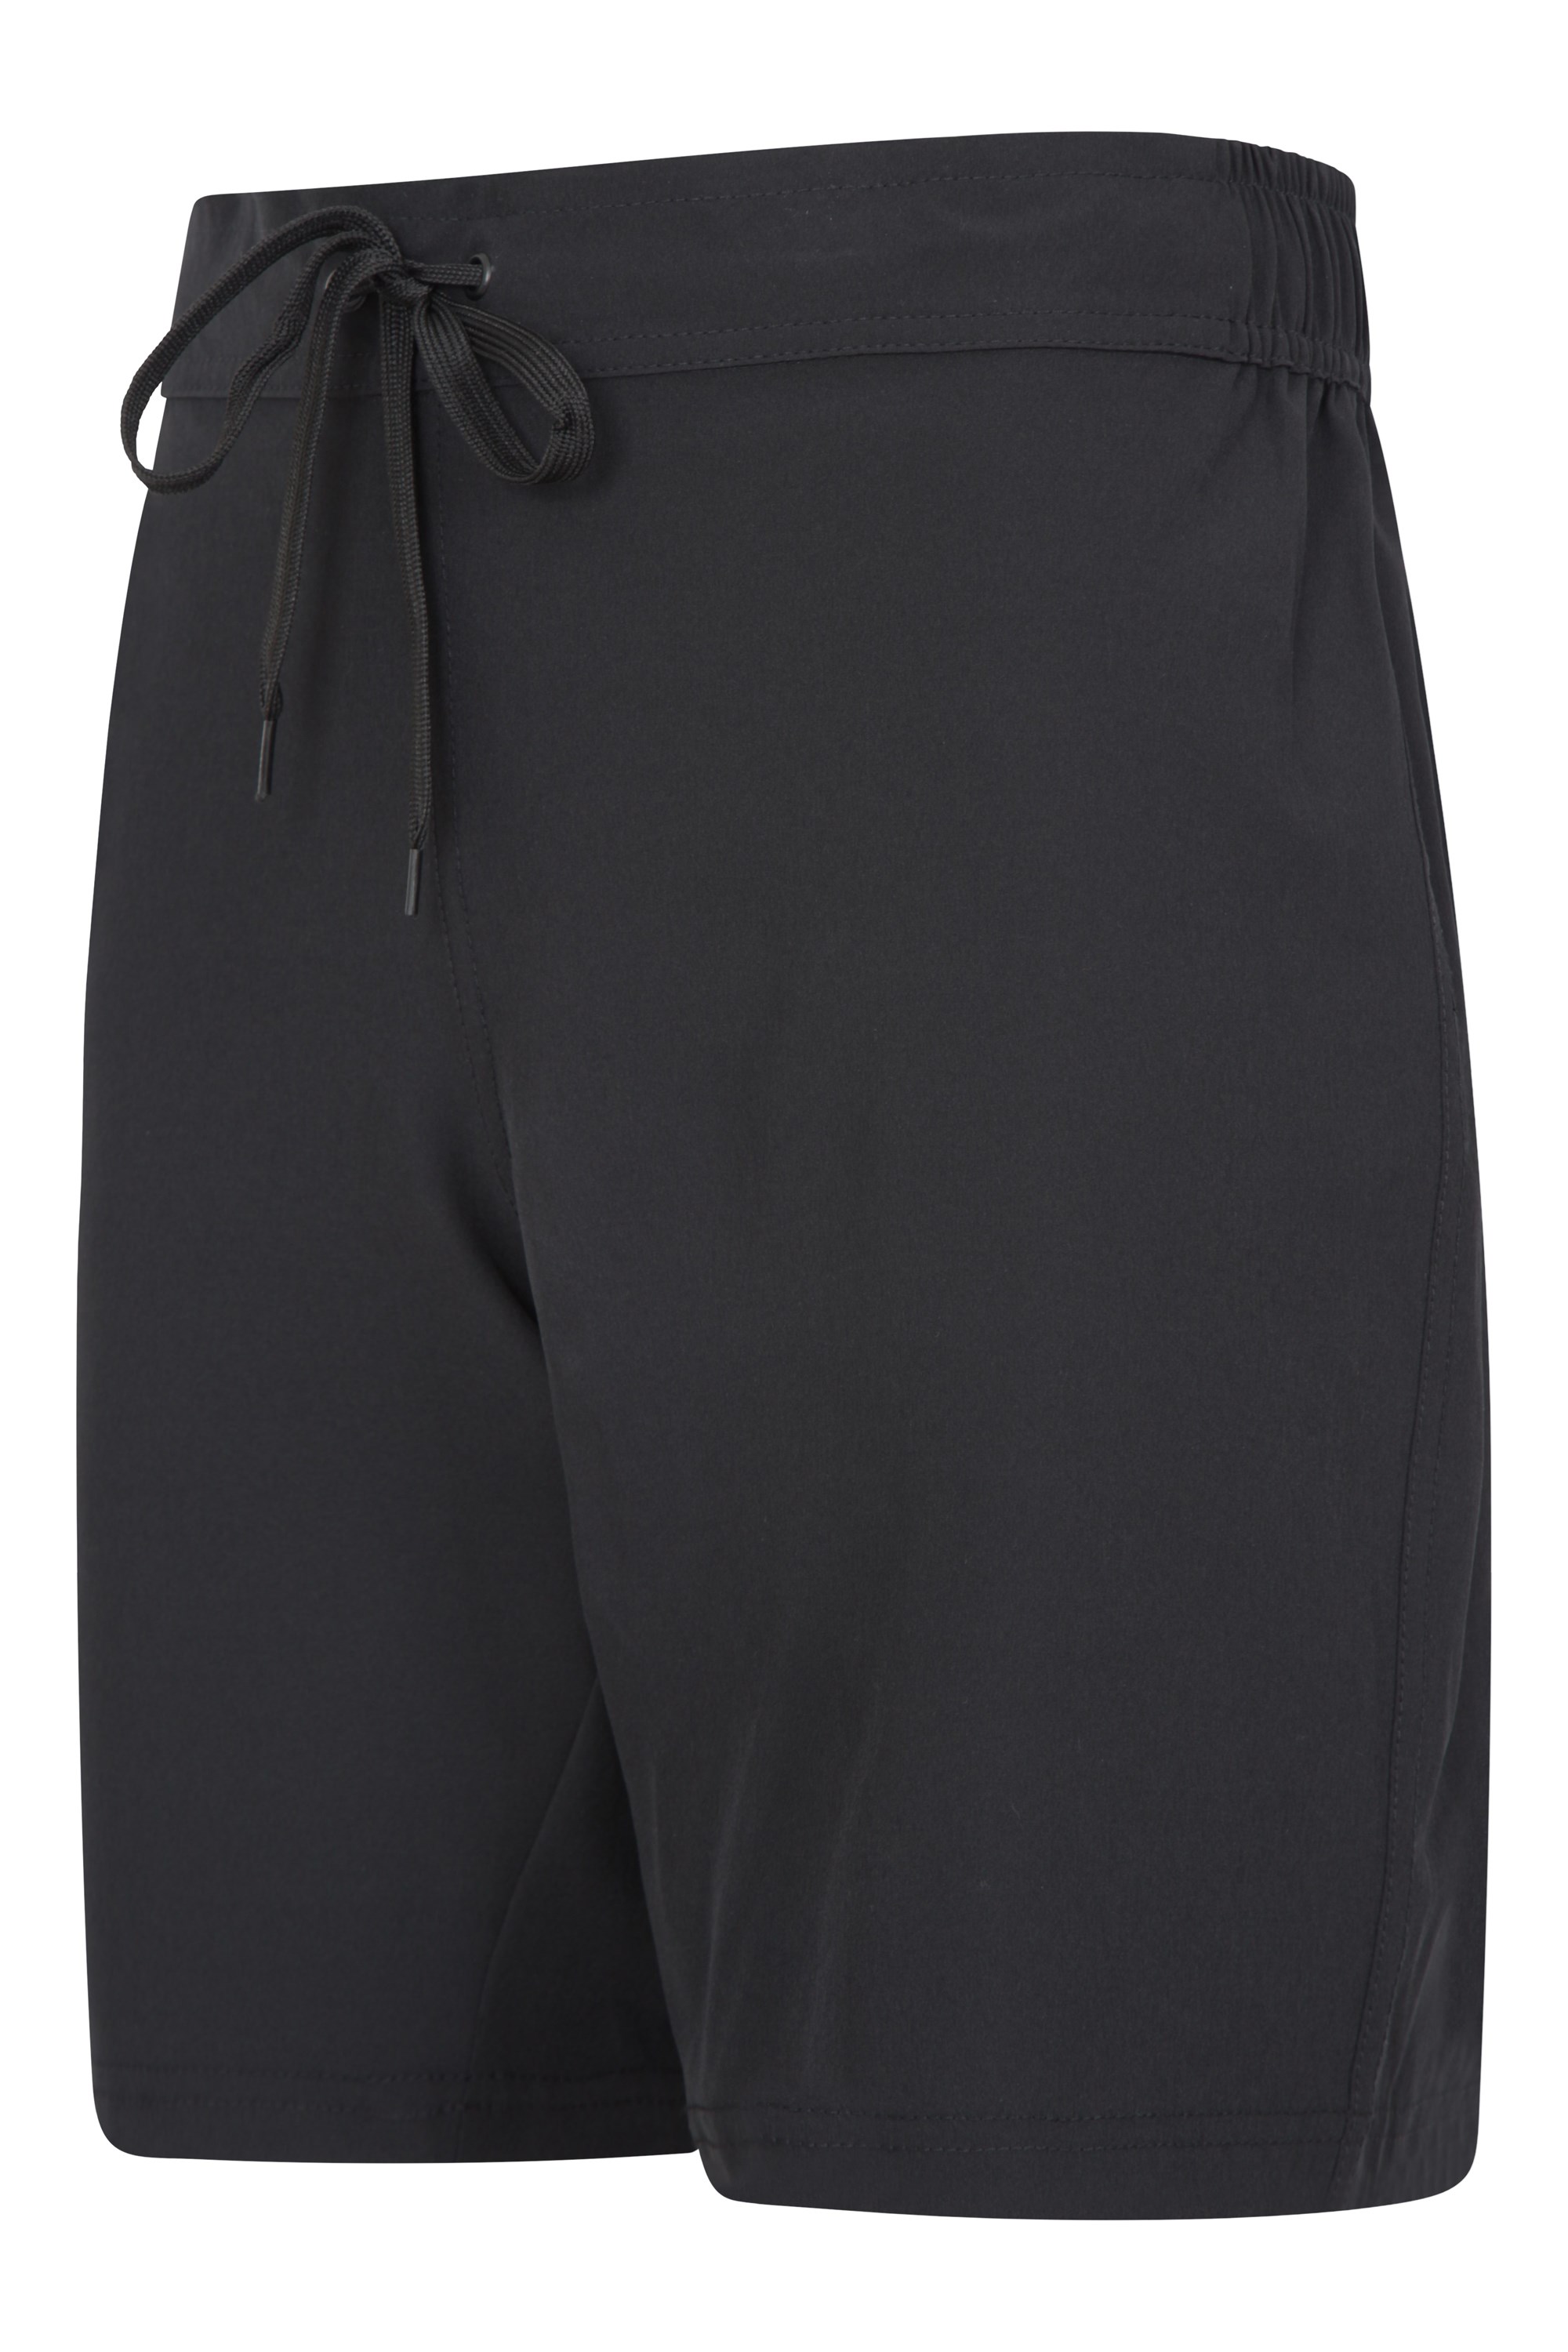 Mountain Warehouse Wms Womens Quick Dry Stretch Long Boardshort Beach Shorts 